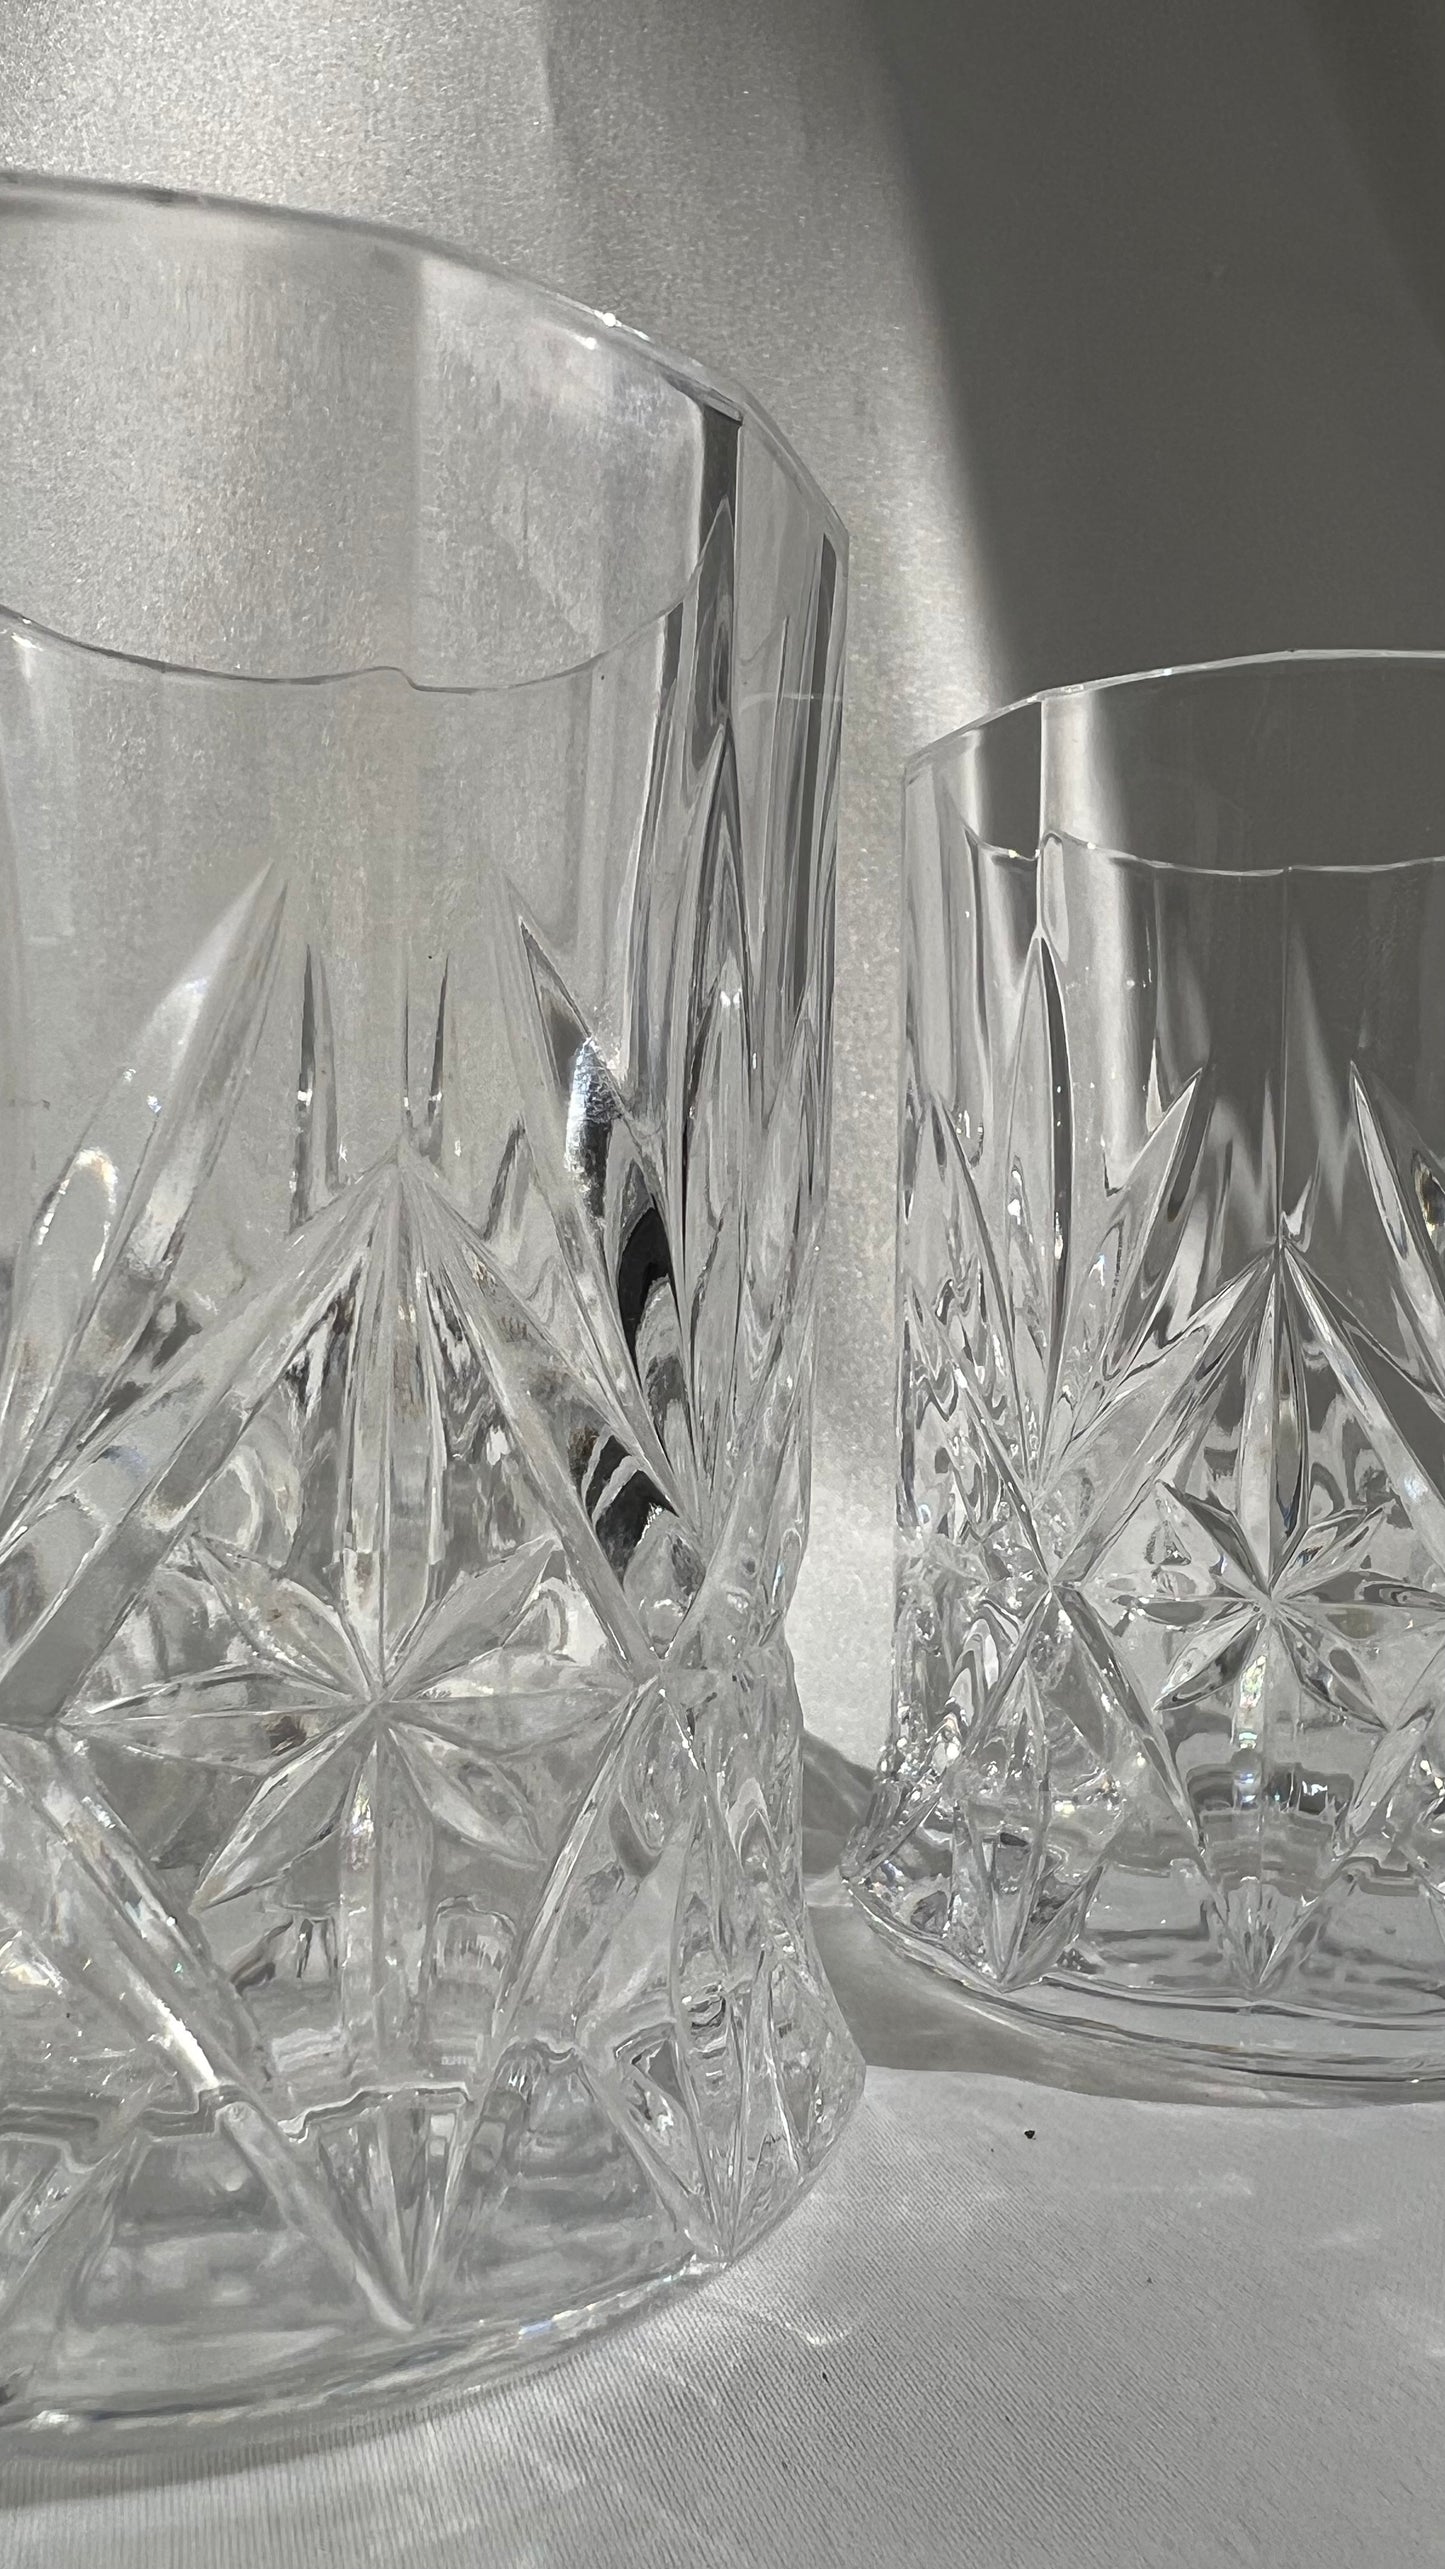 Two Crystal Glasses | זוג כוסות קריסטל